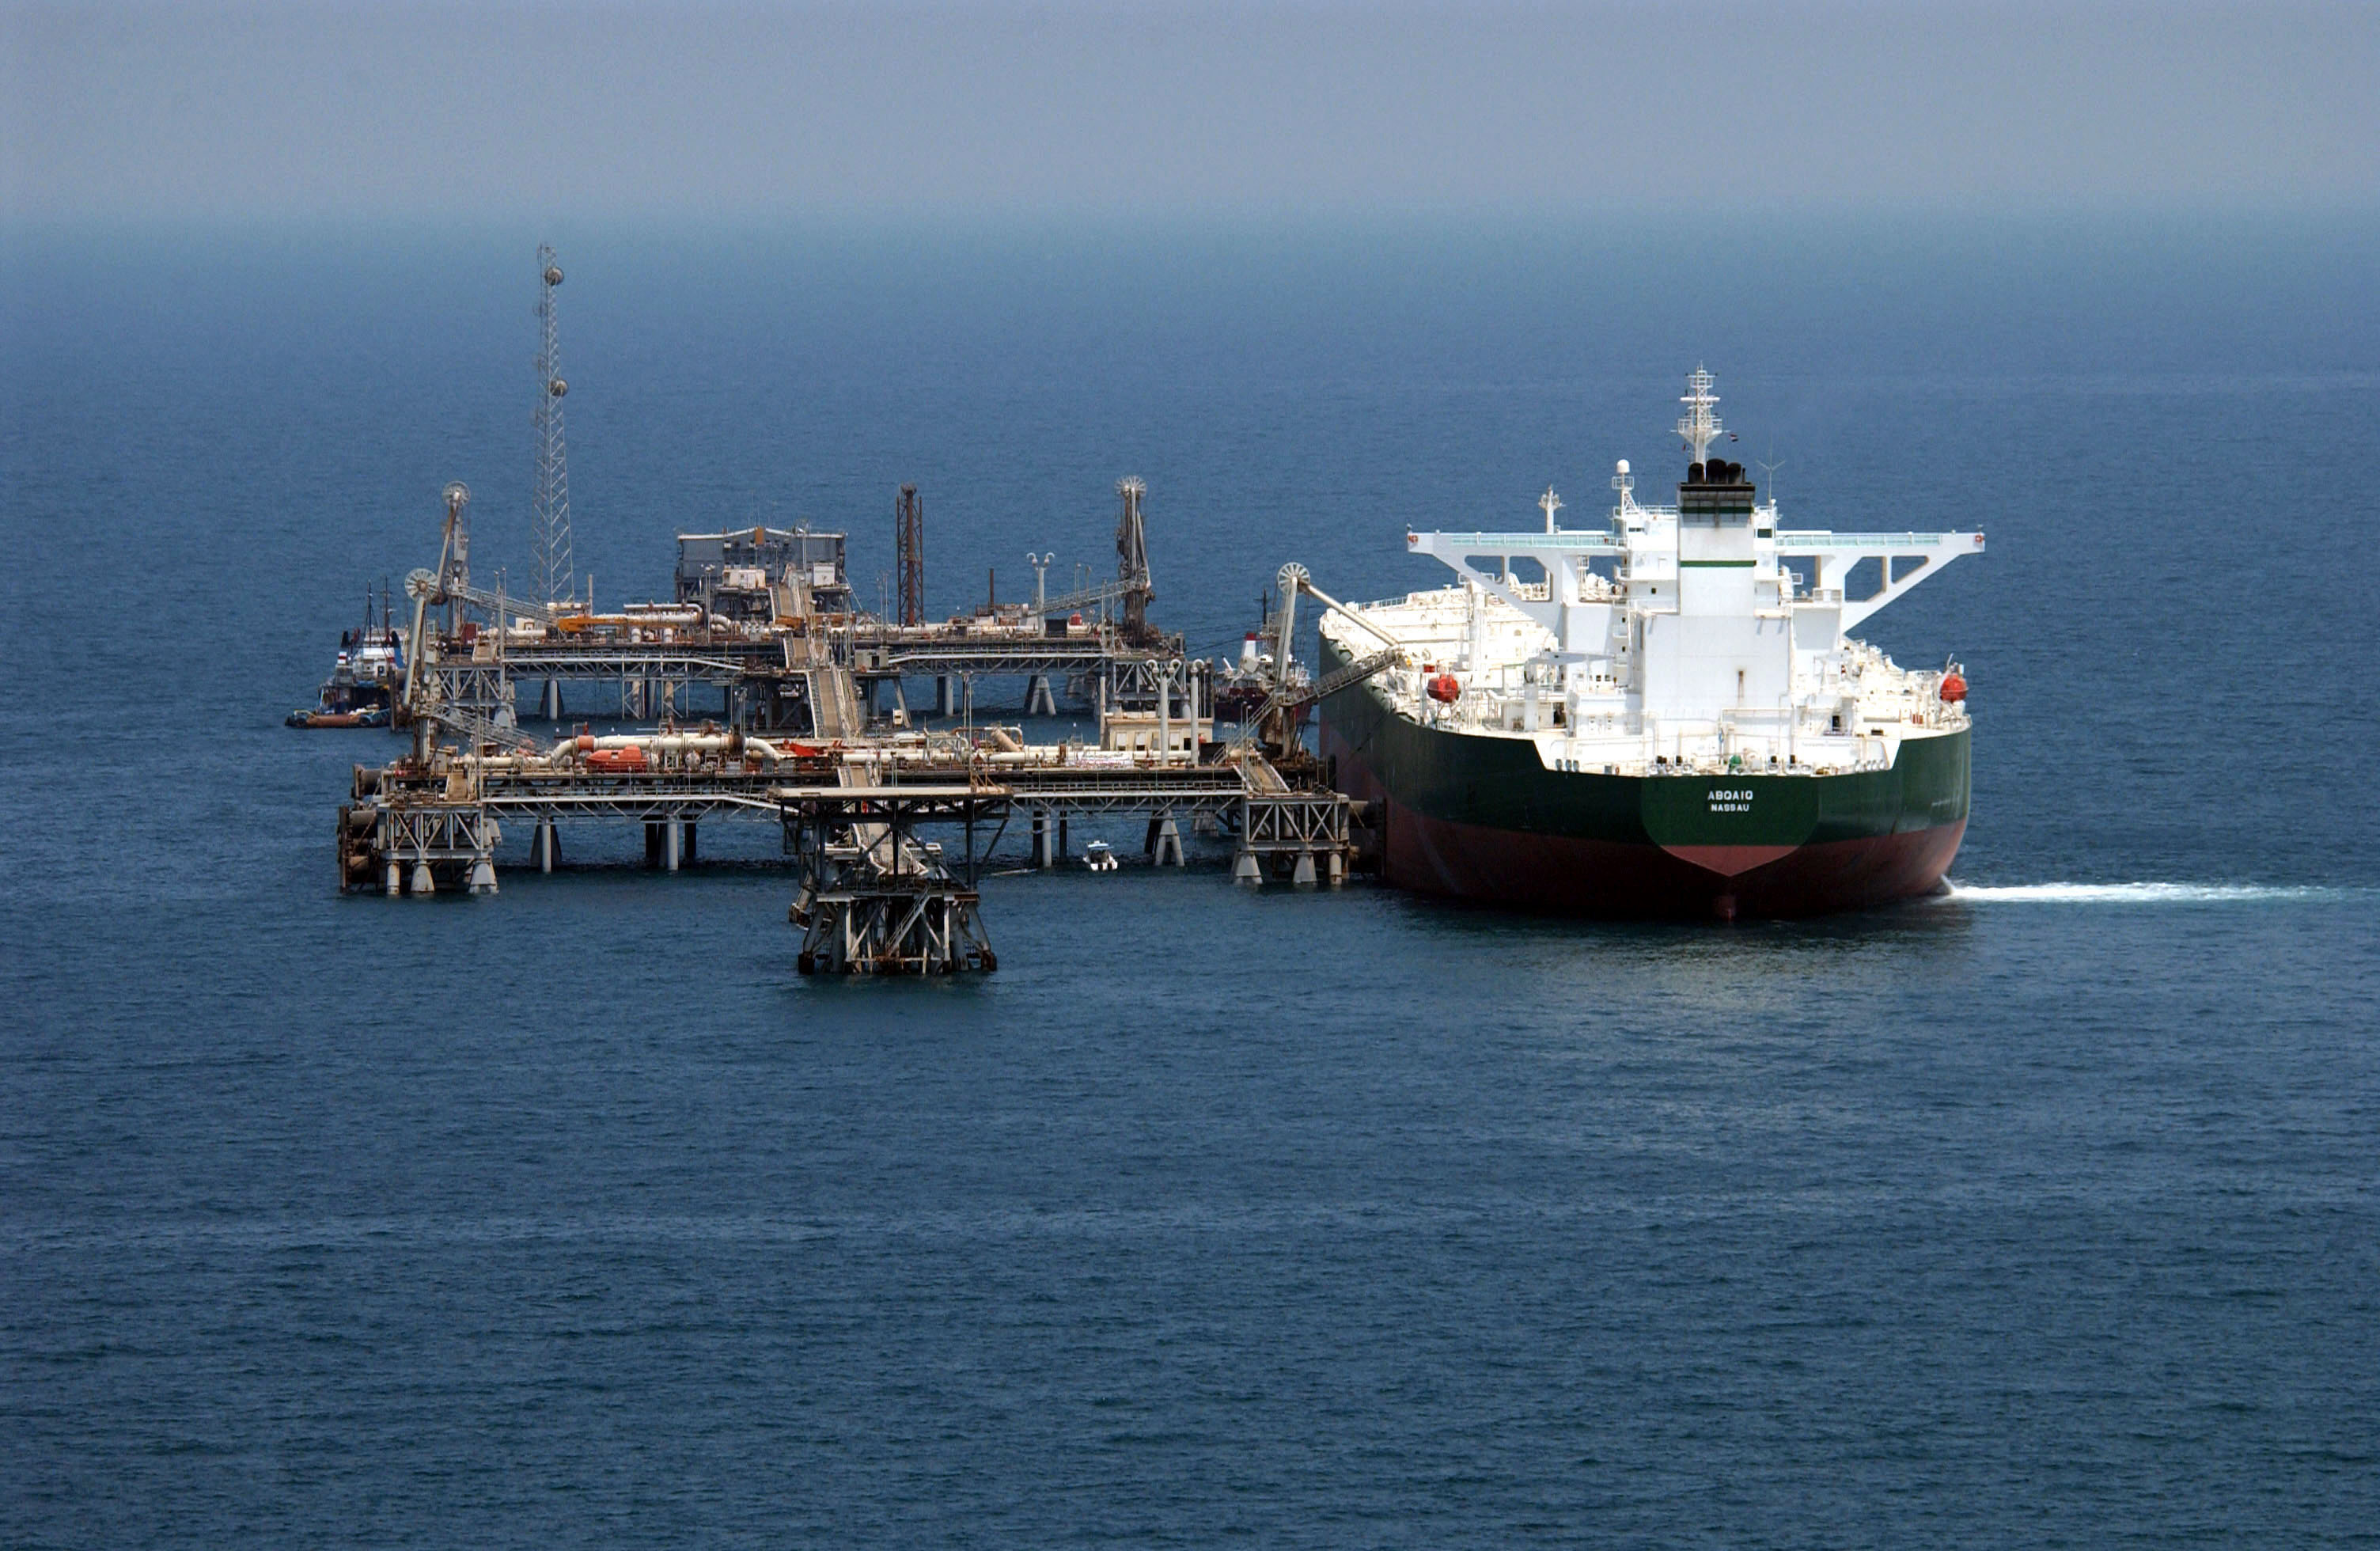 File:Tanker offshore terminal.jpg - Wikimedia Commons